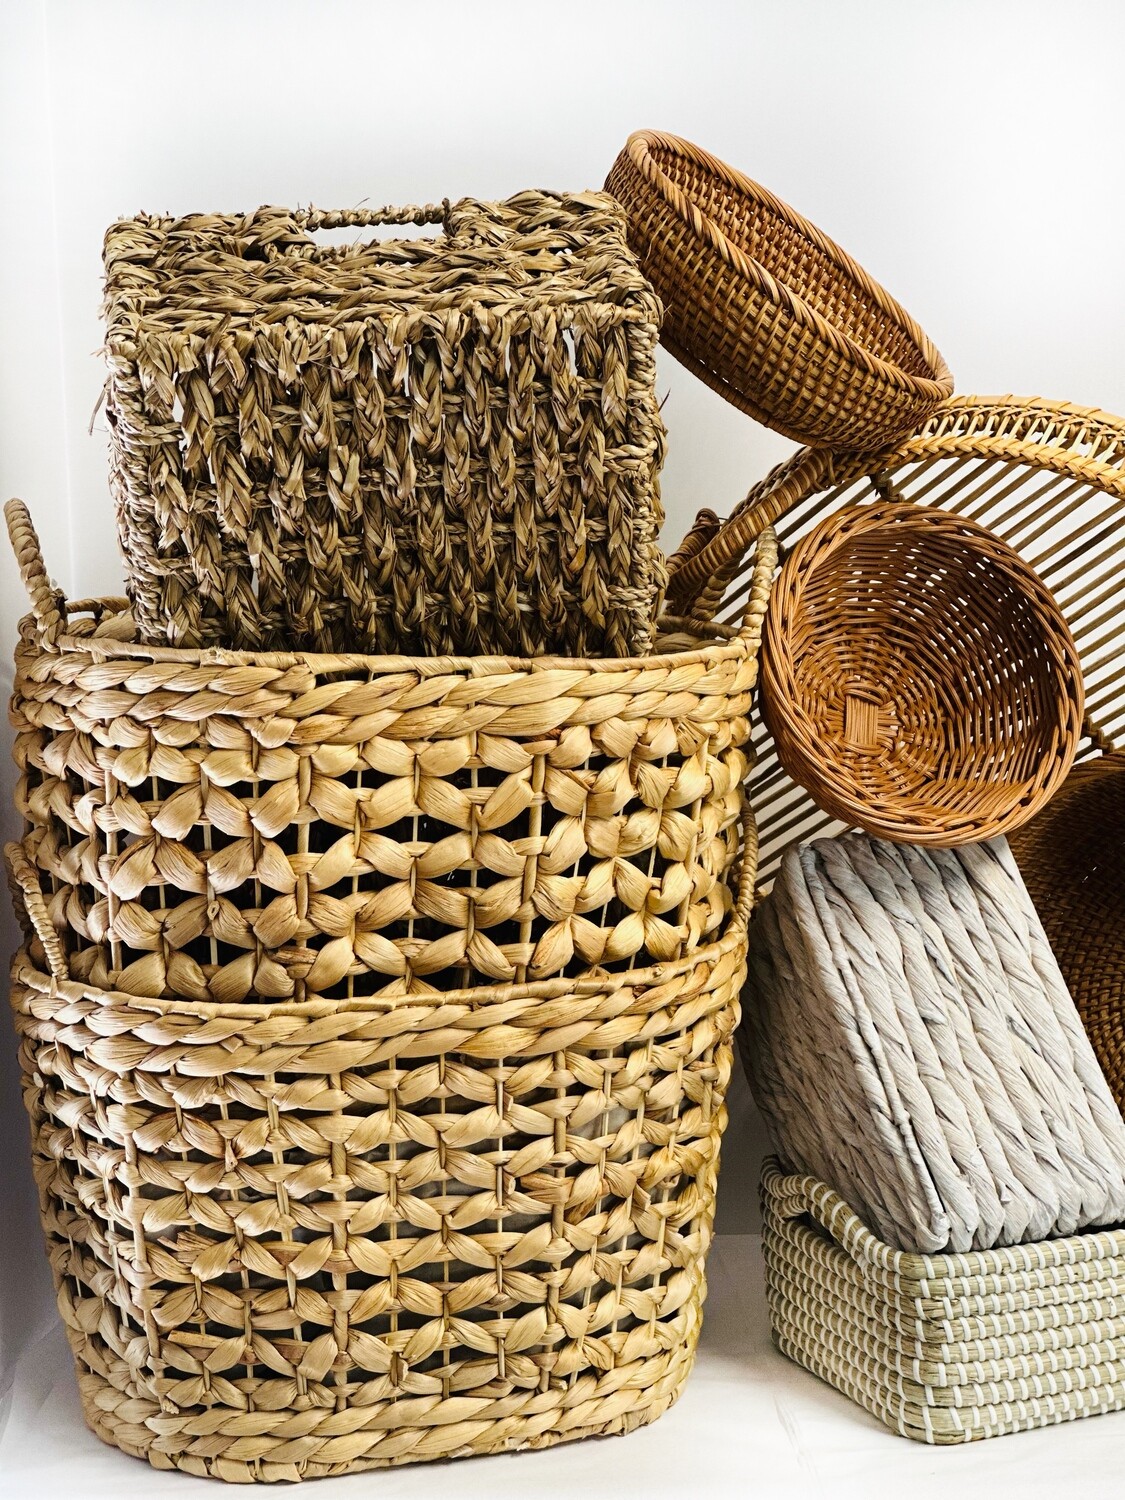 Choose Your Basket Type